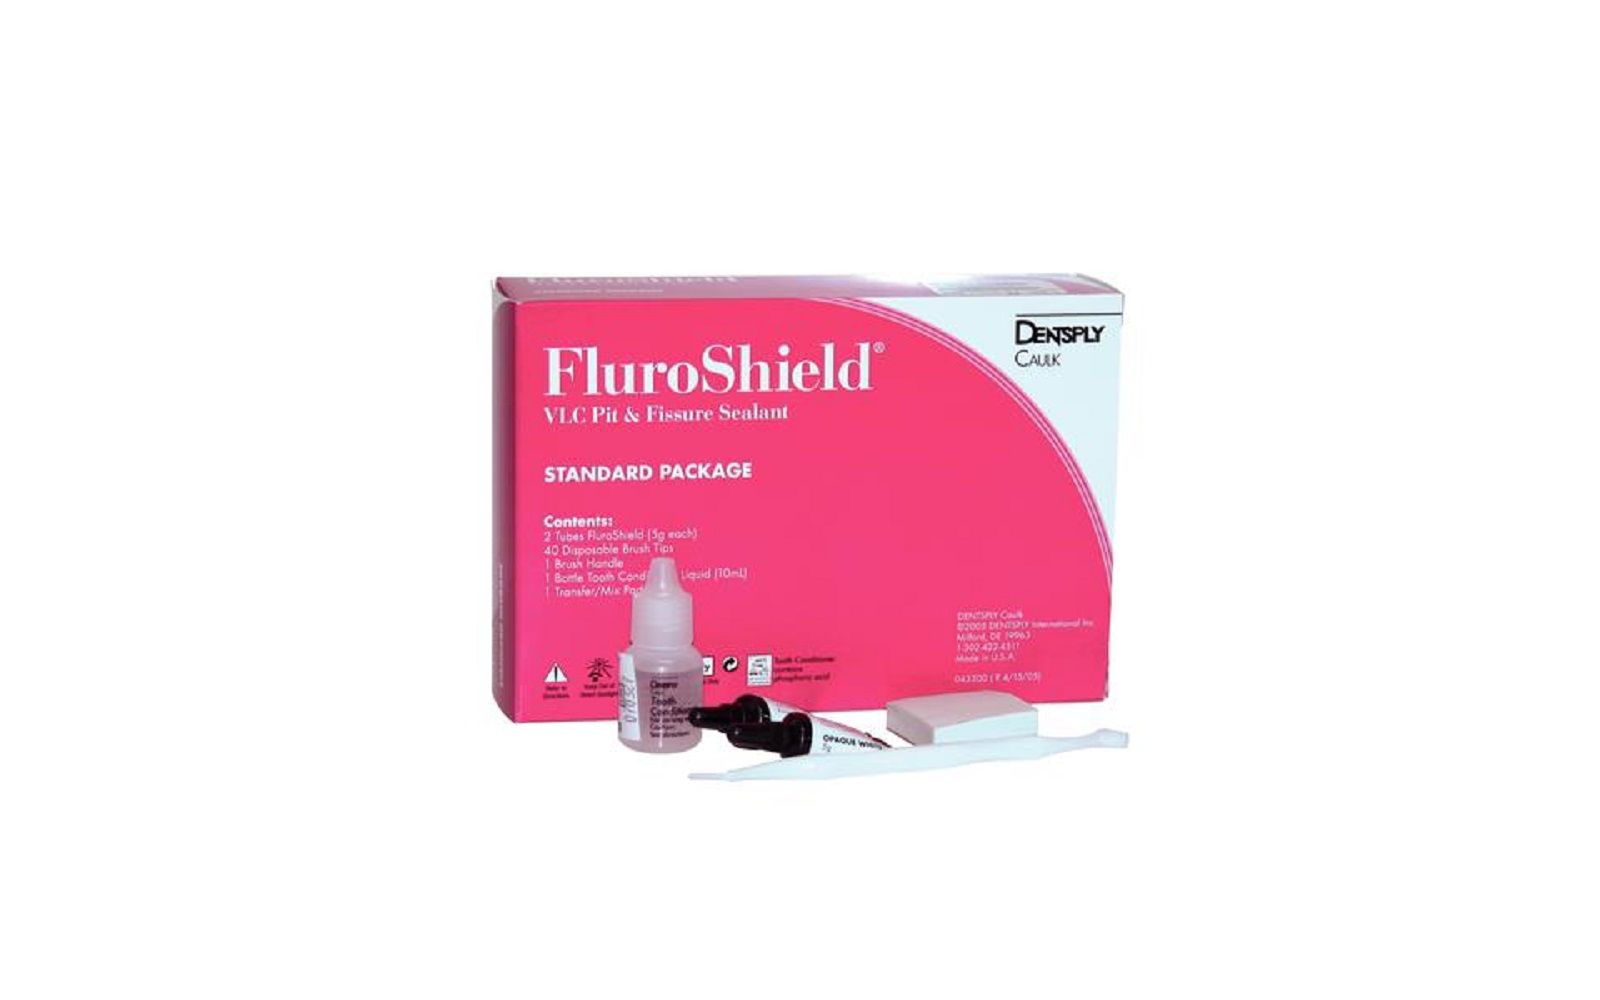 Fluroshield® pit and fissure sealant - dentsply caulk